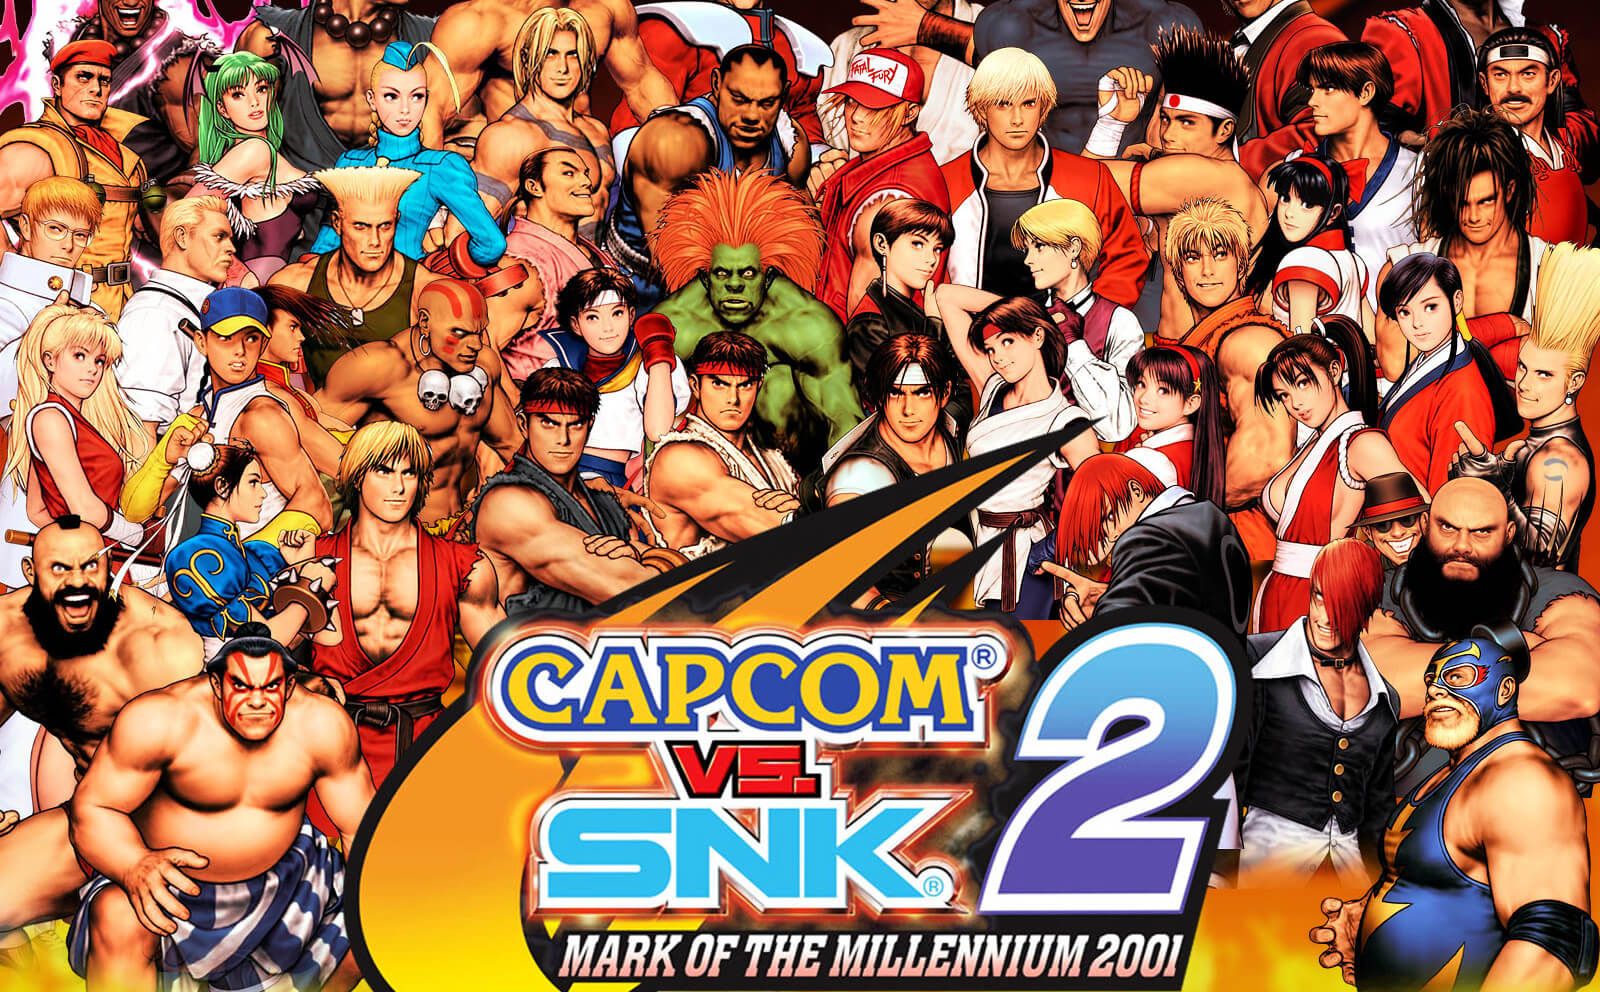 Capcom vs. SNK 2: Mark of the Millennium 2001 Evo 2023 Results